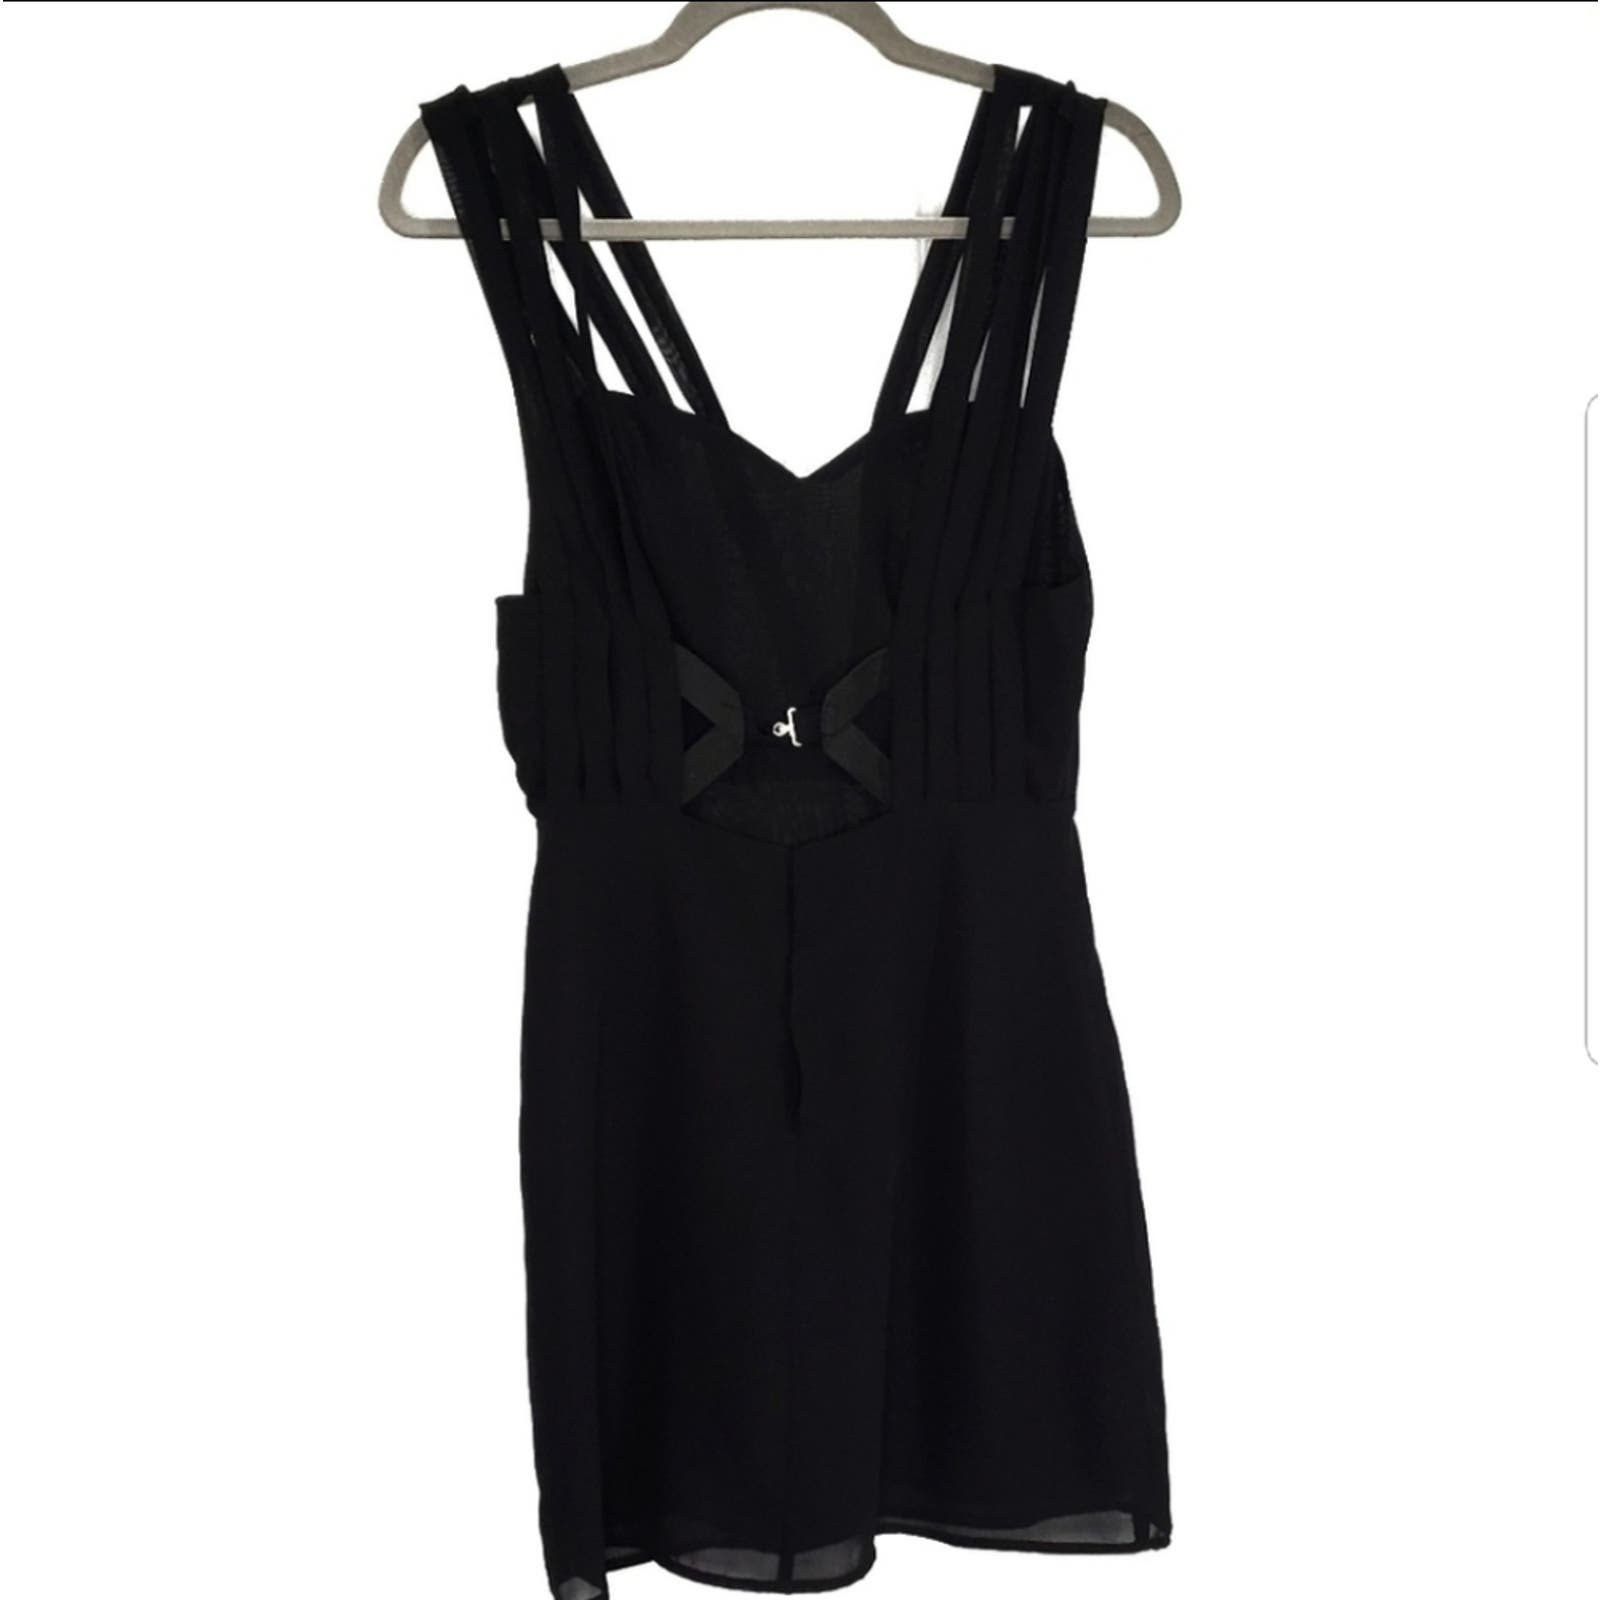 Fashion UO Double in Brass Black Dress S phFcbcoDl Low Price